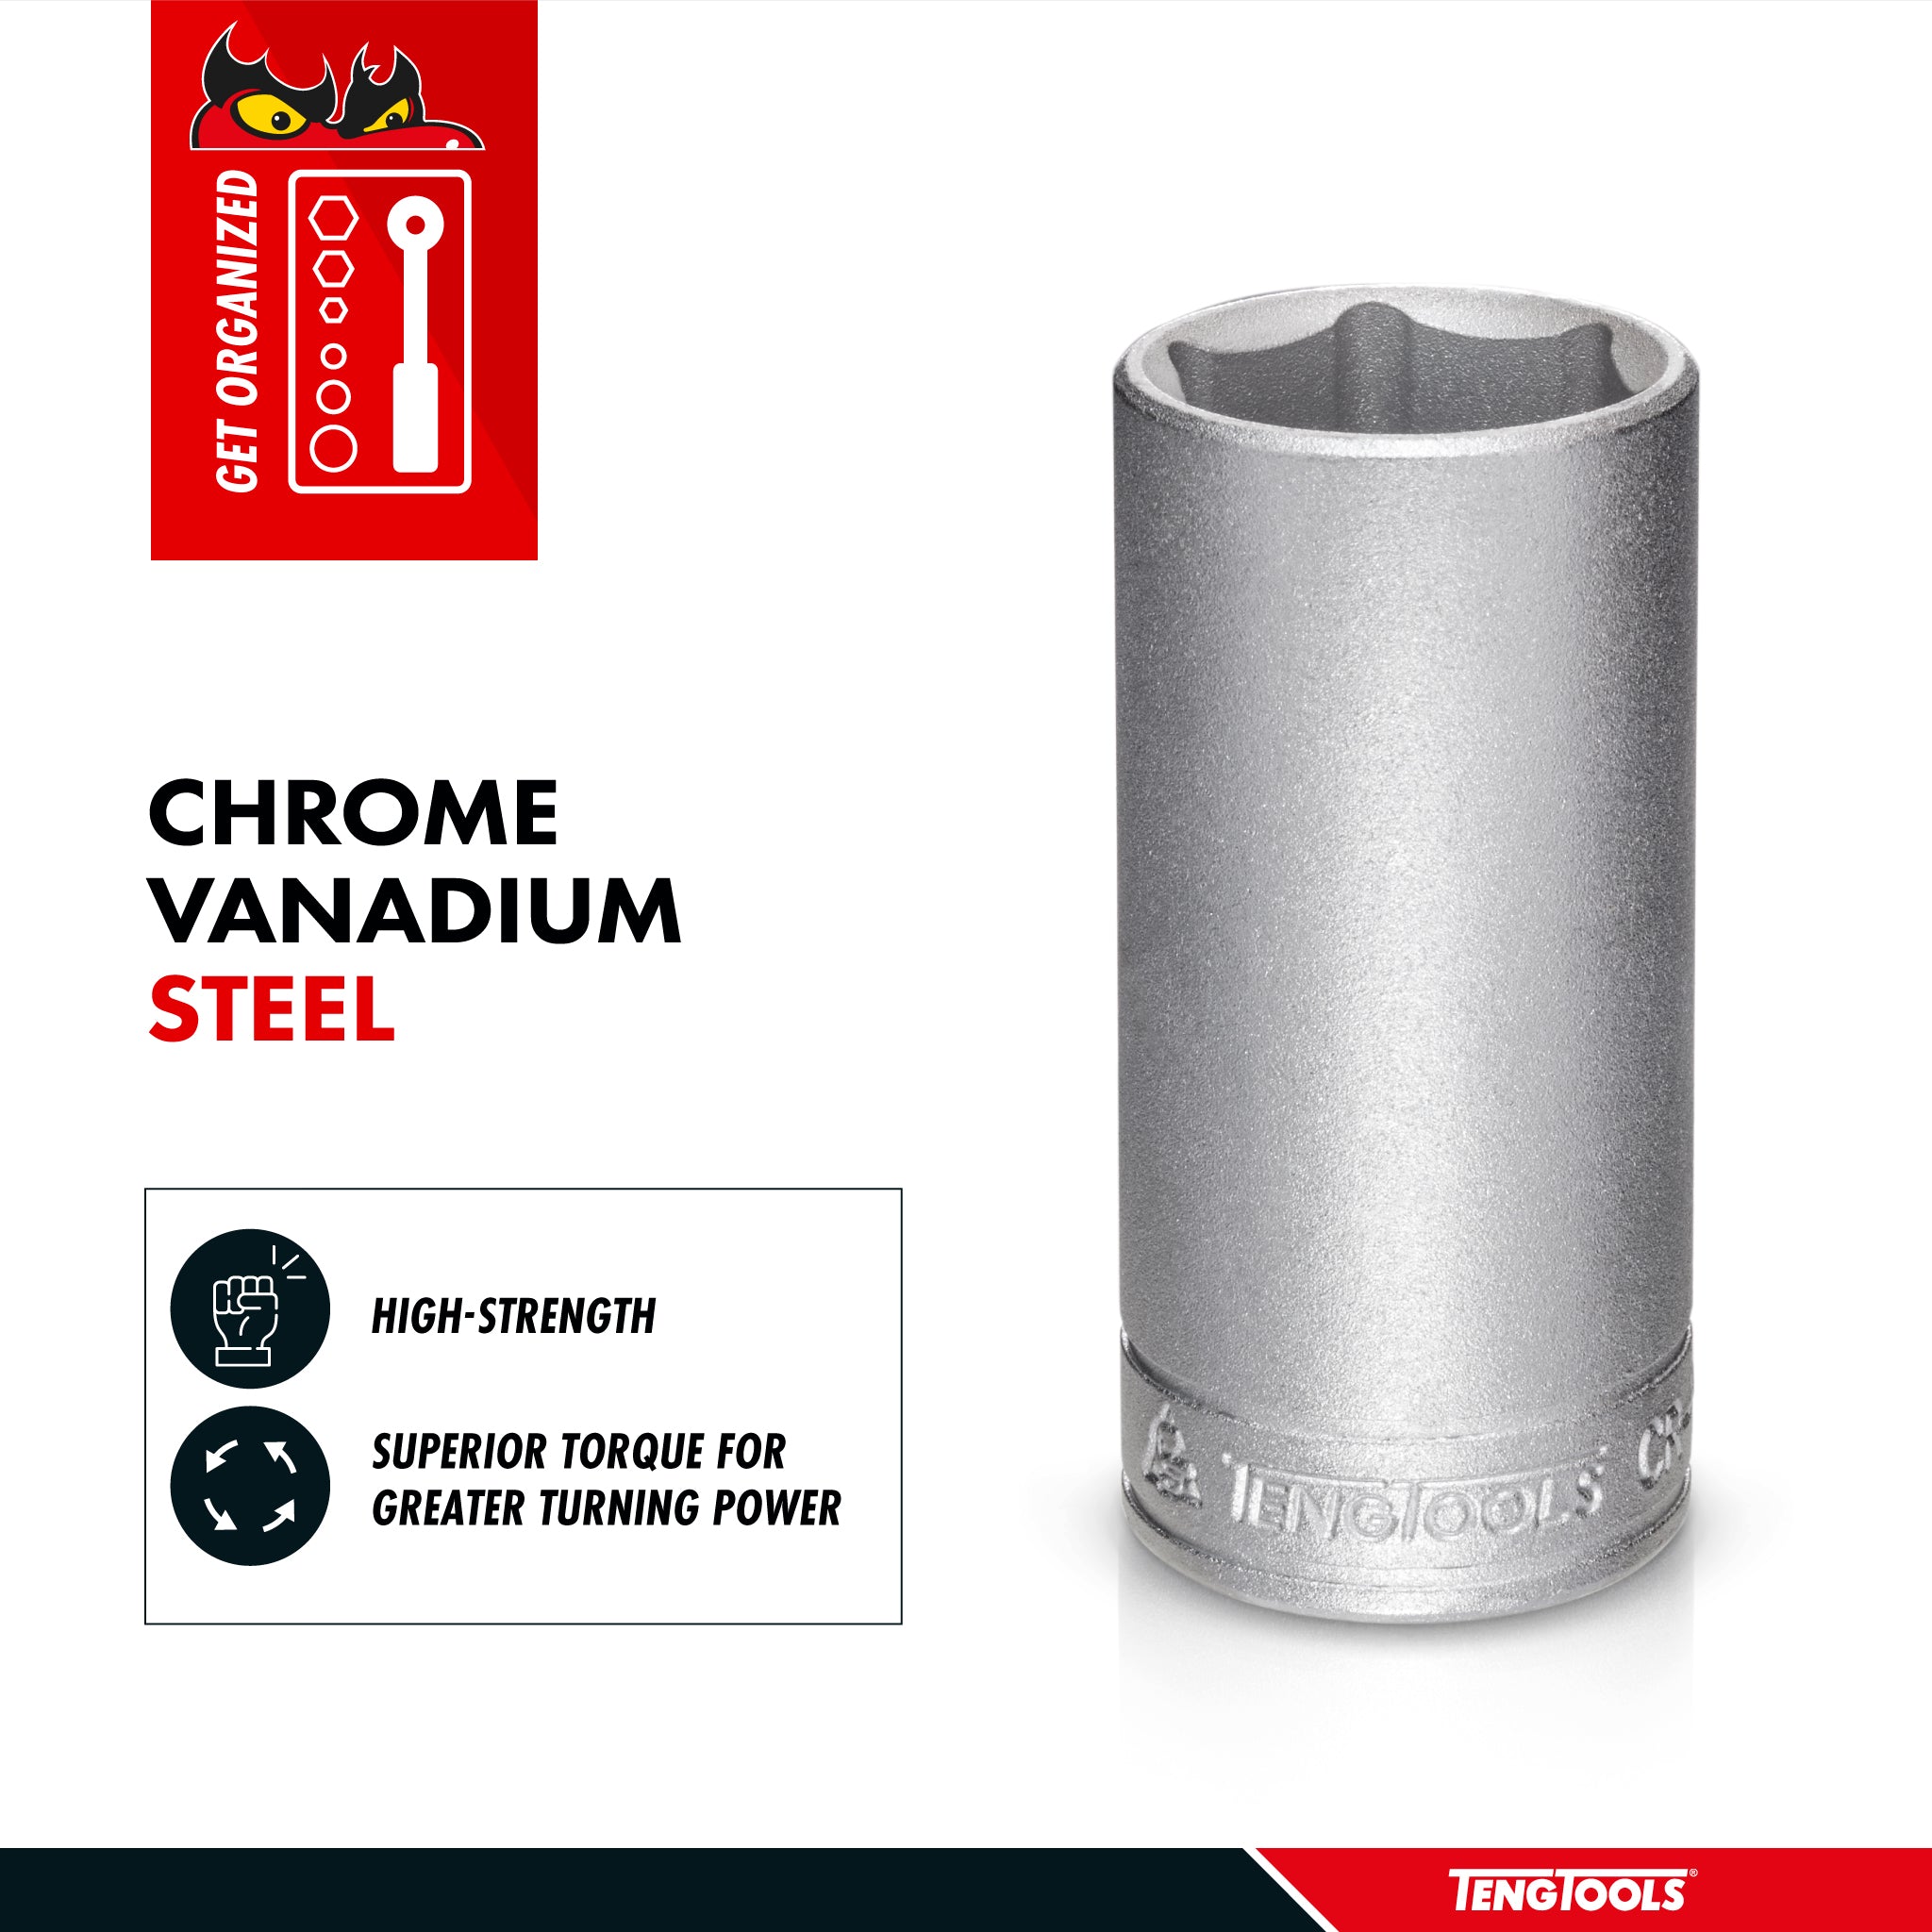 Teng Tools 1/4 Inch Drive 6 Point Metric Deep Chrome Vanadium Sockets - 8mm